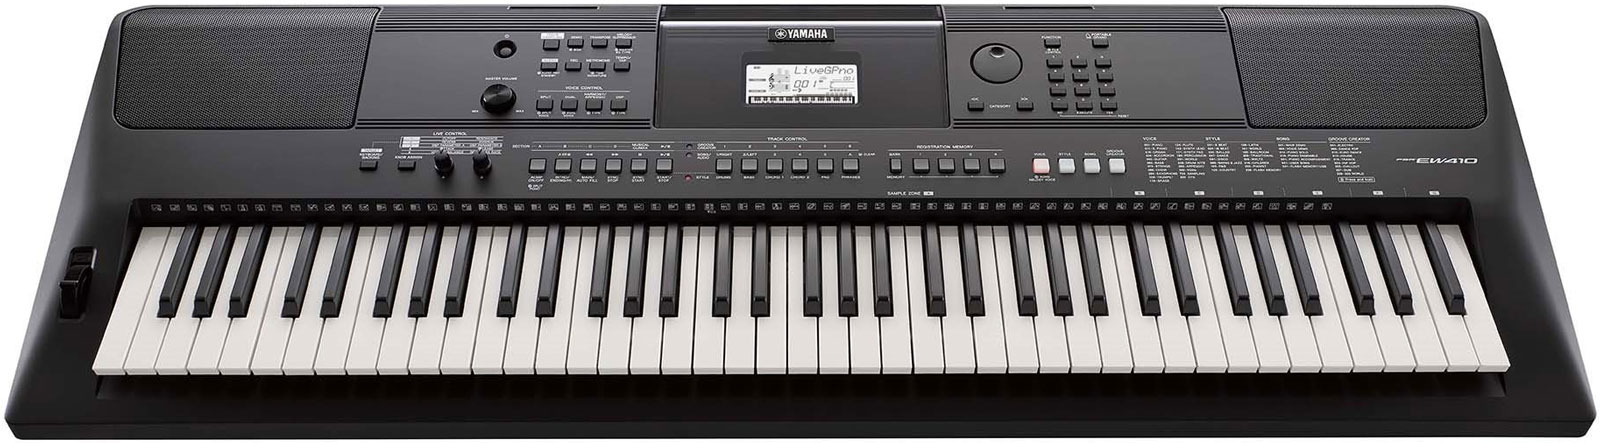 Yamaha PSR-EW410 76-Key Portable Keyboard - Music Machine ...